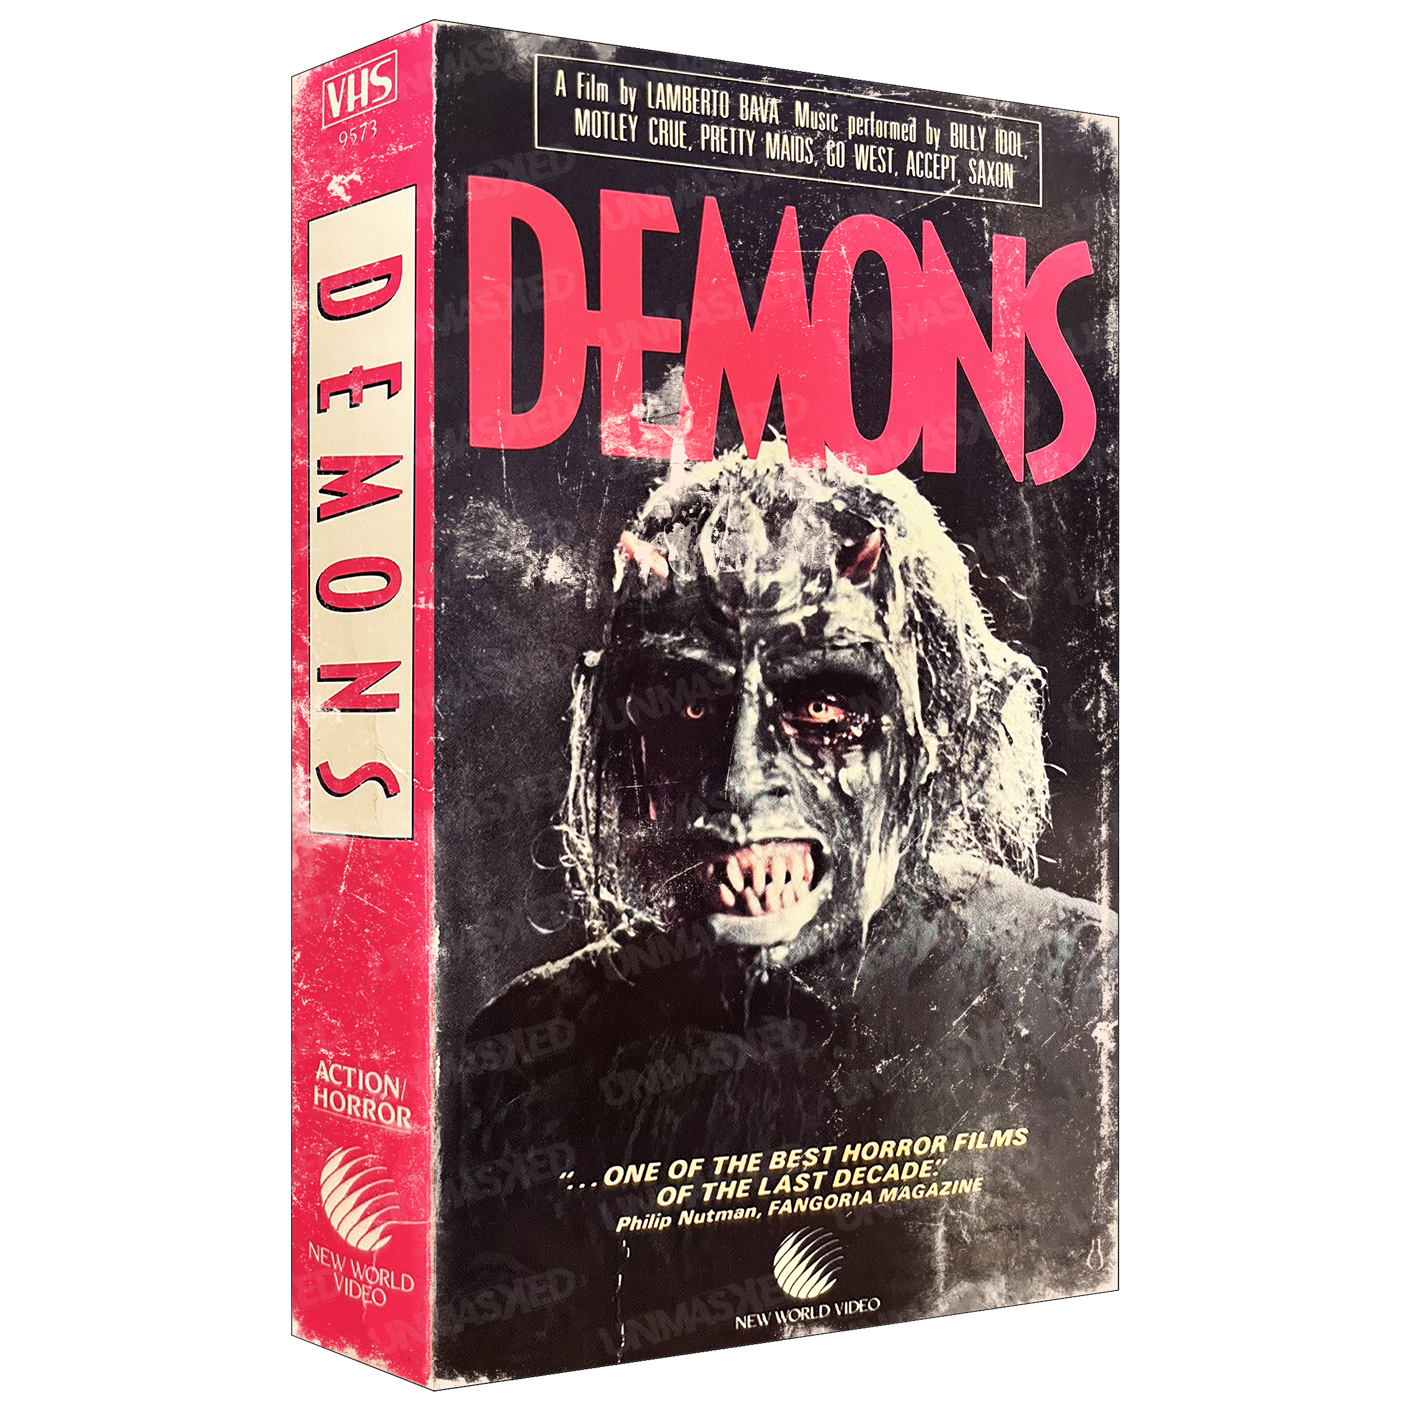 Demons Oversized VHS Plaque